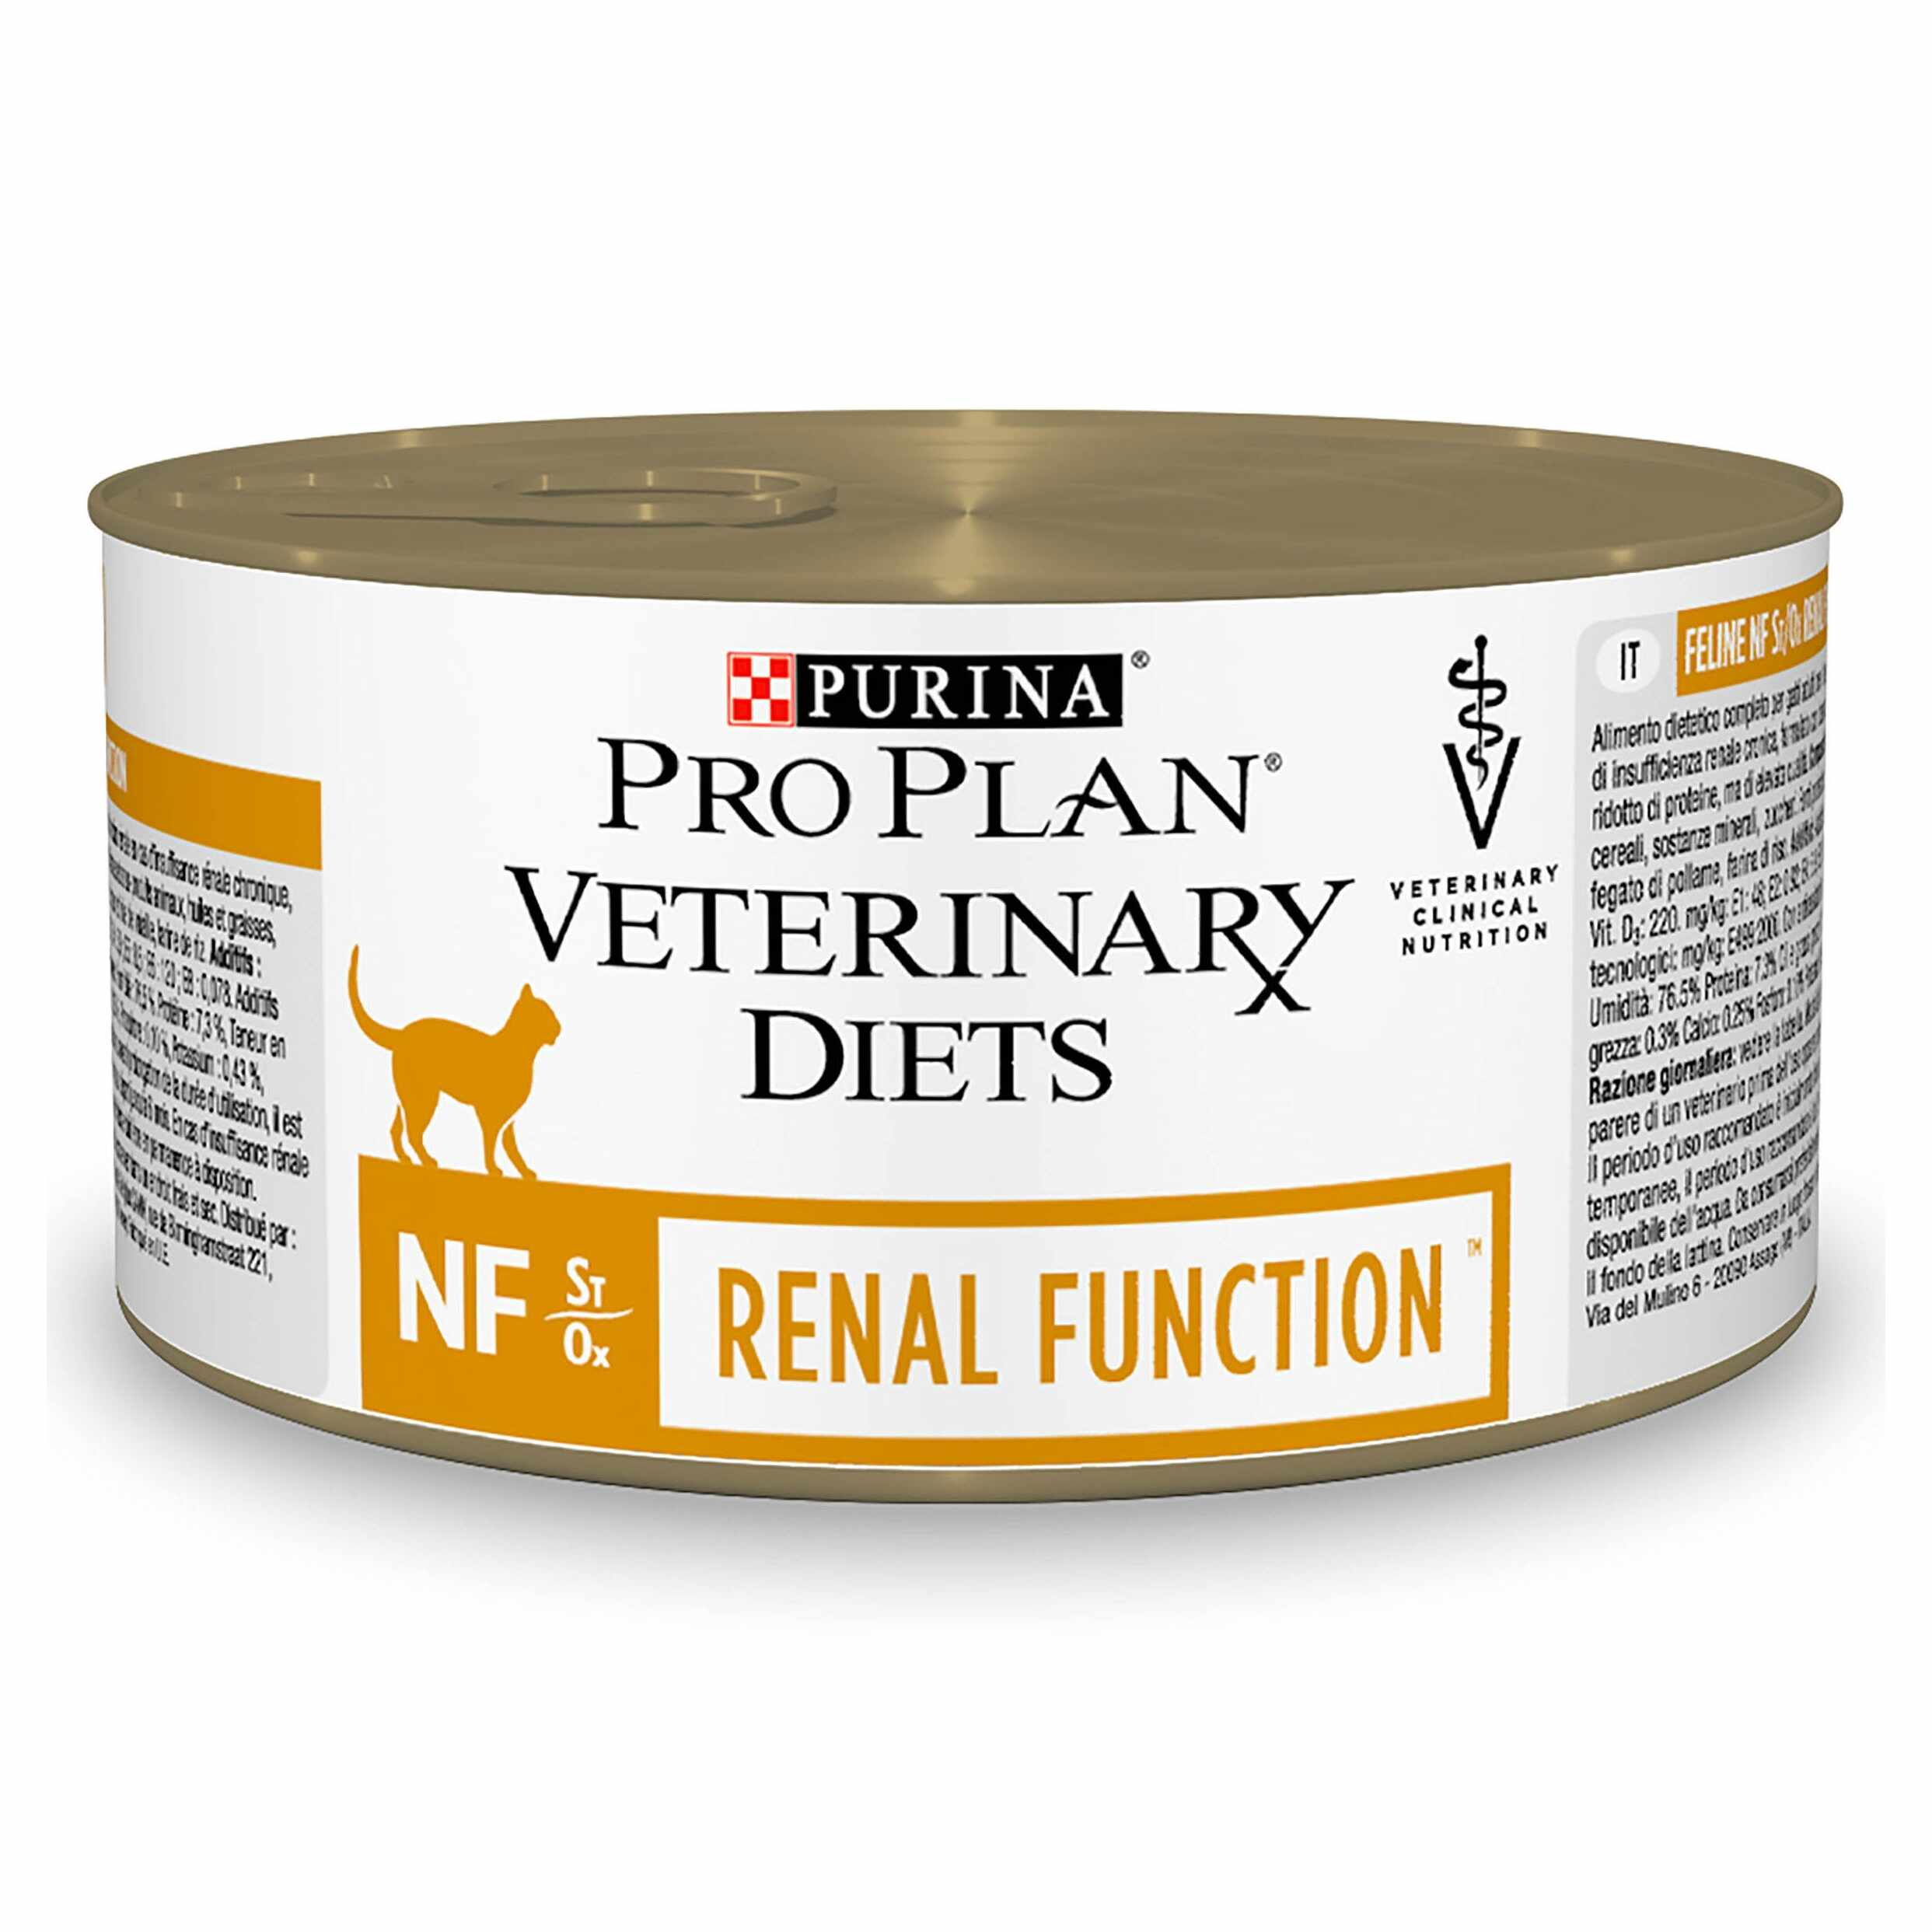 Purina Veterinary Diets Feline NF, Renal Function, 195 g